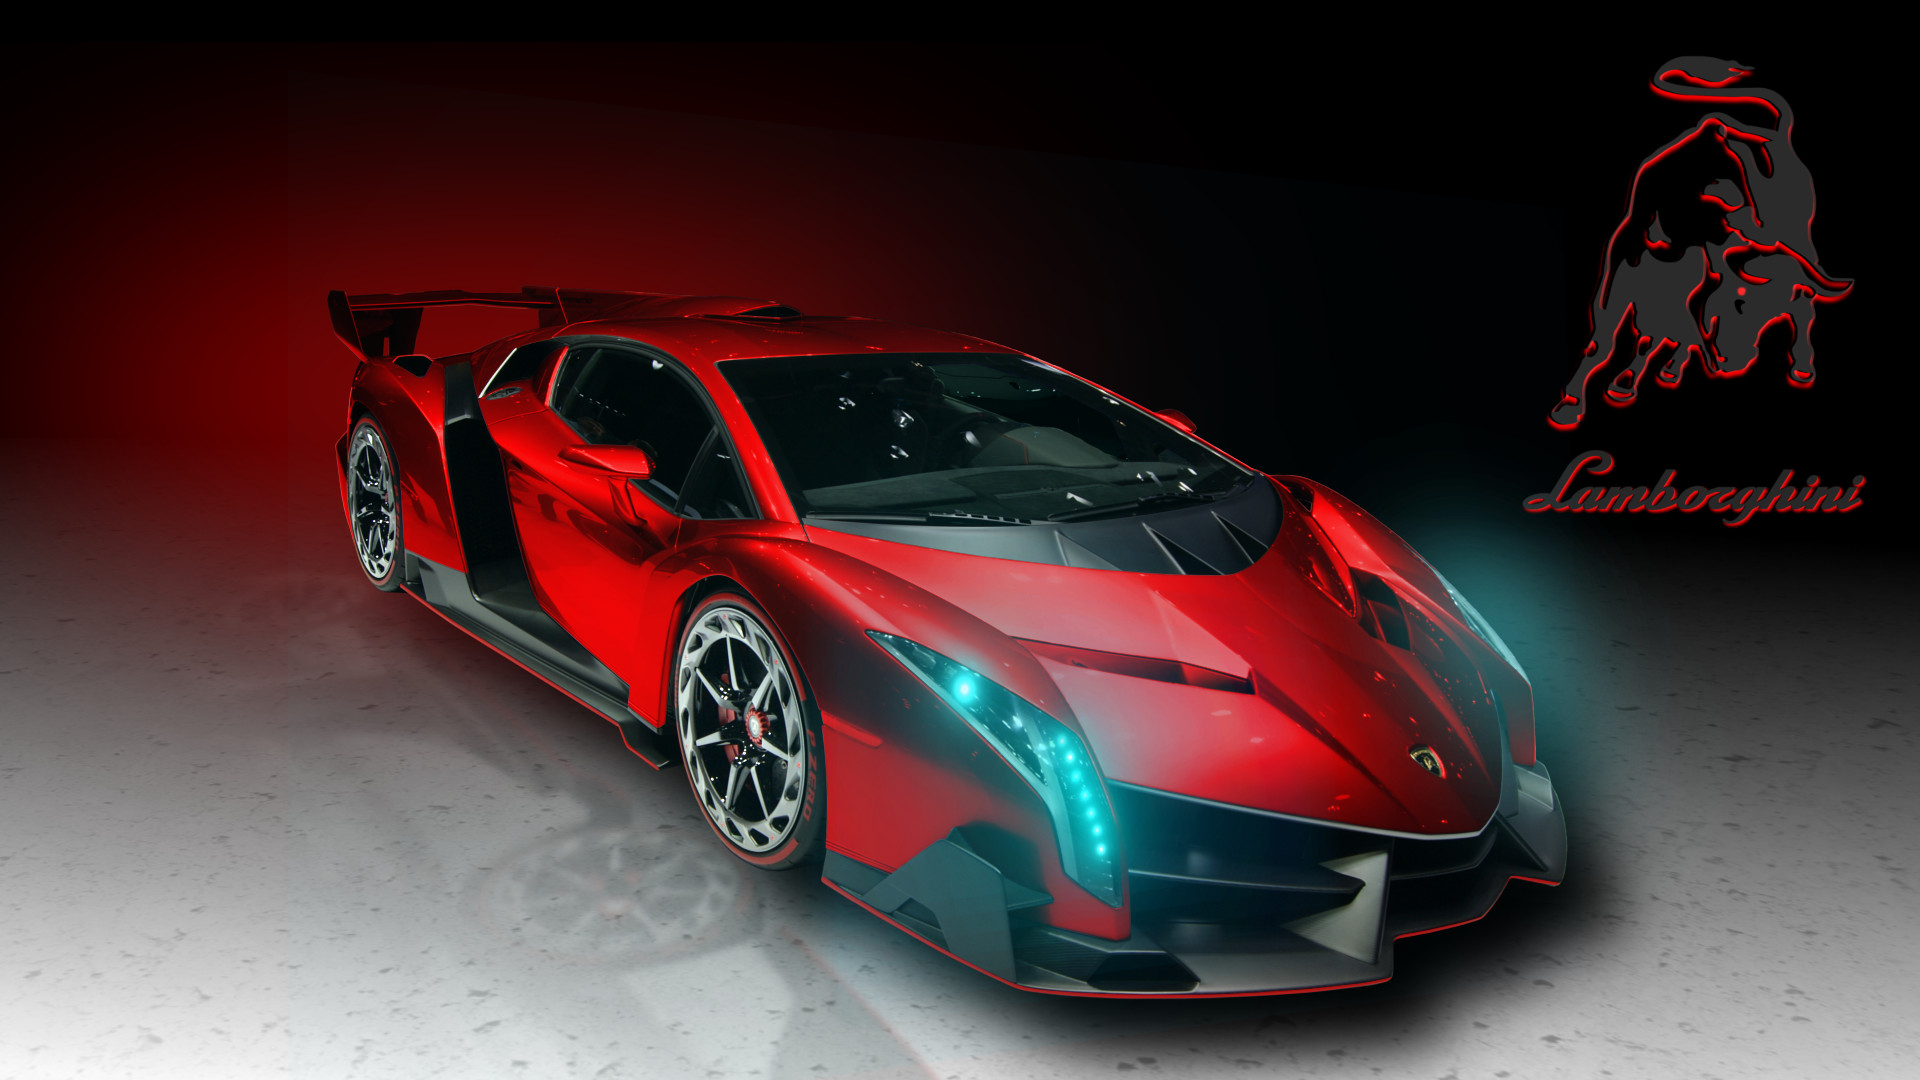 Lamborghini Veneno Wallpaper Image